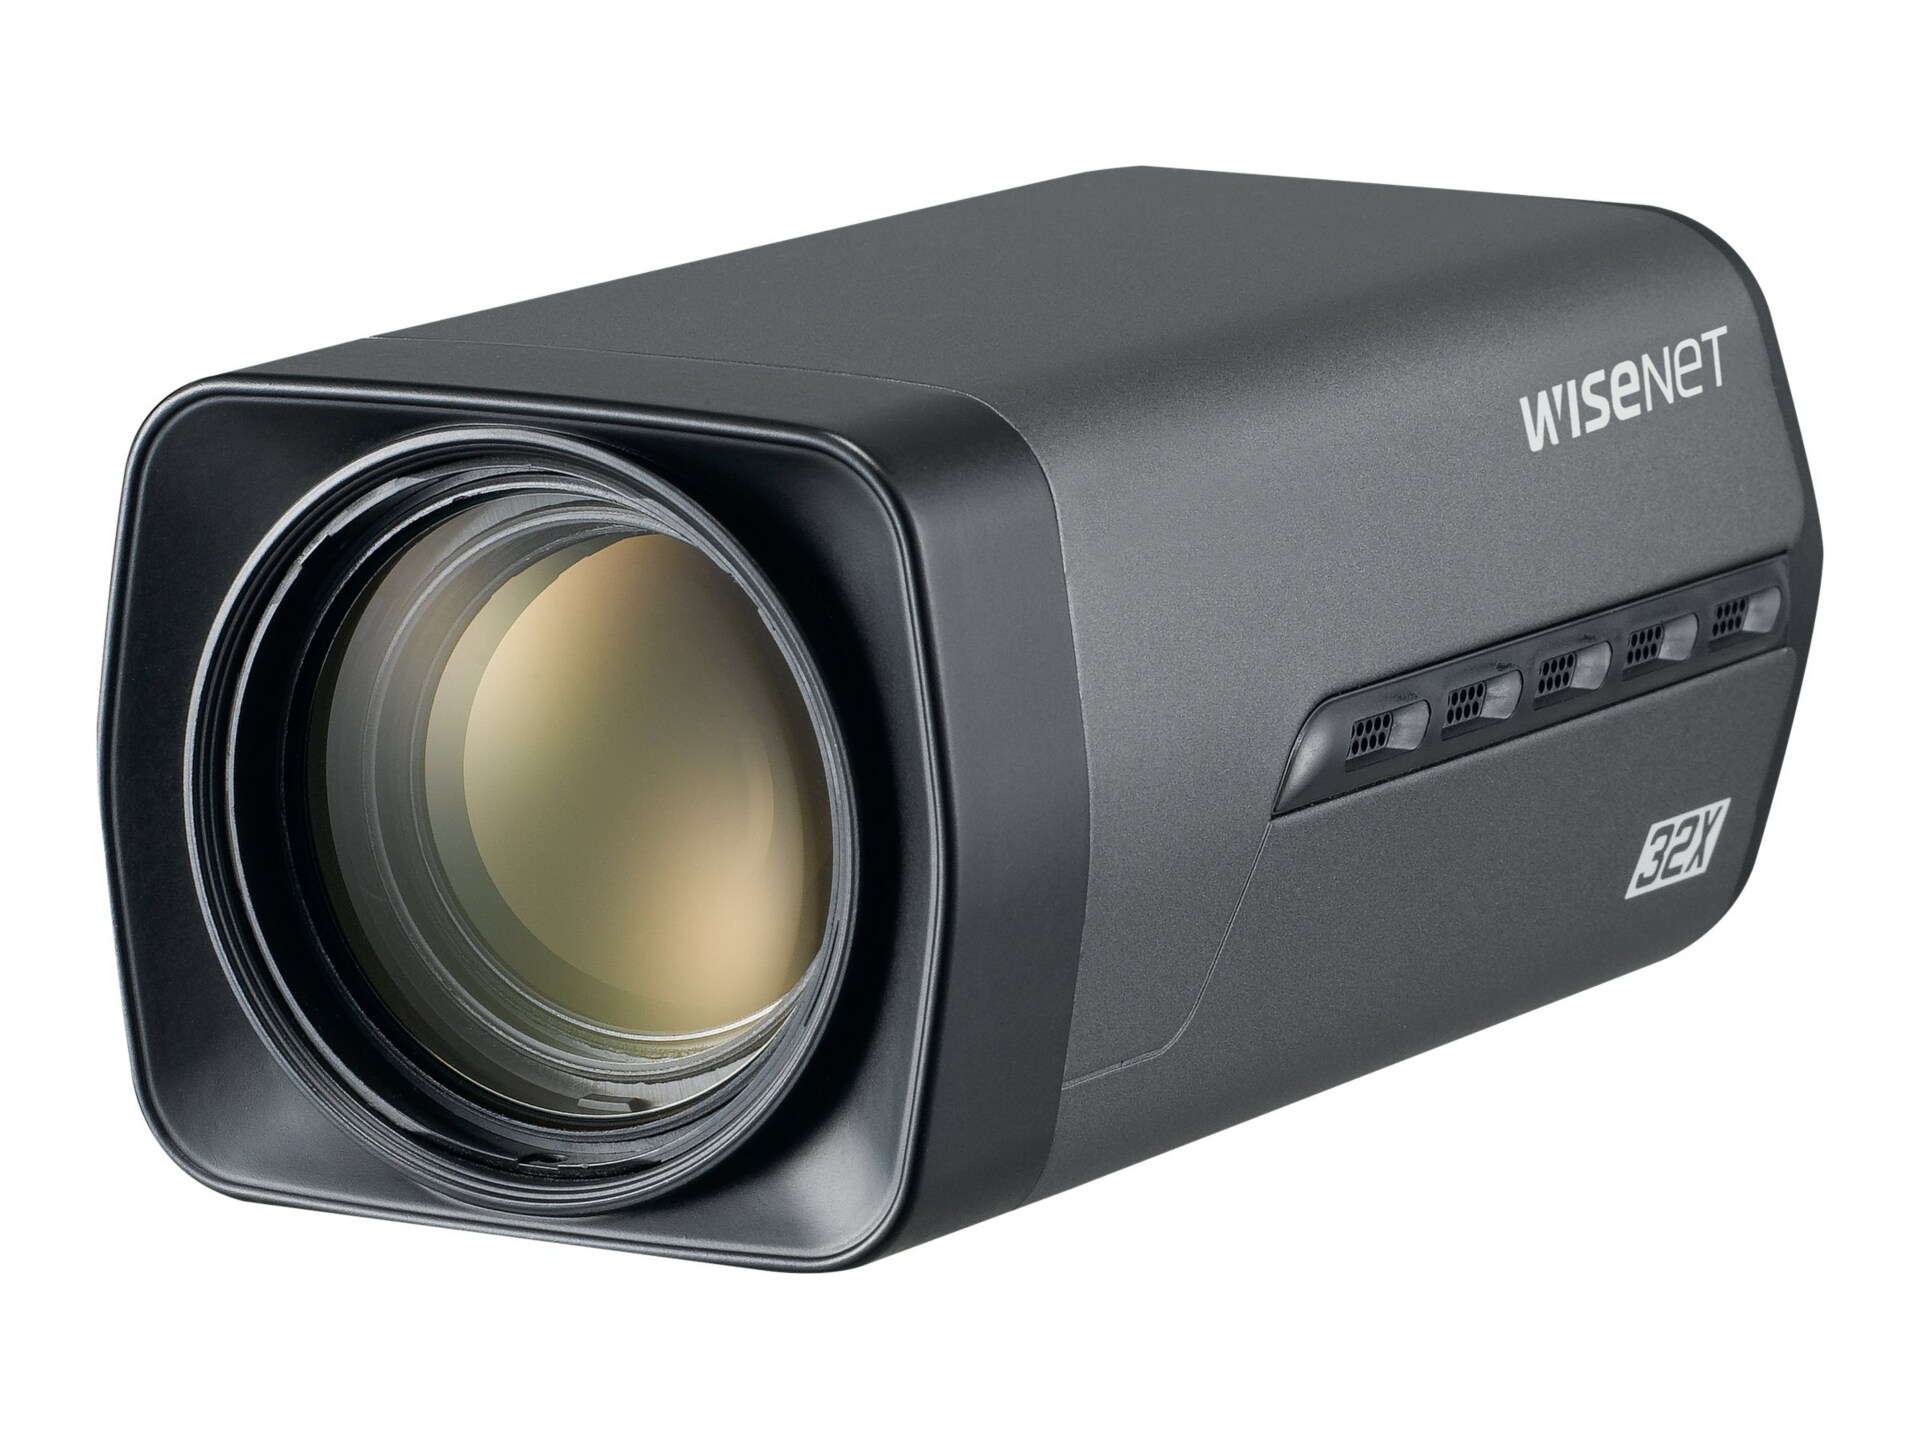 Samsung WiseNet HD+ HD-AHD 2MP Indoor Box Analog Security Camera - Black